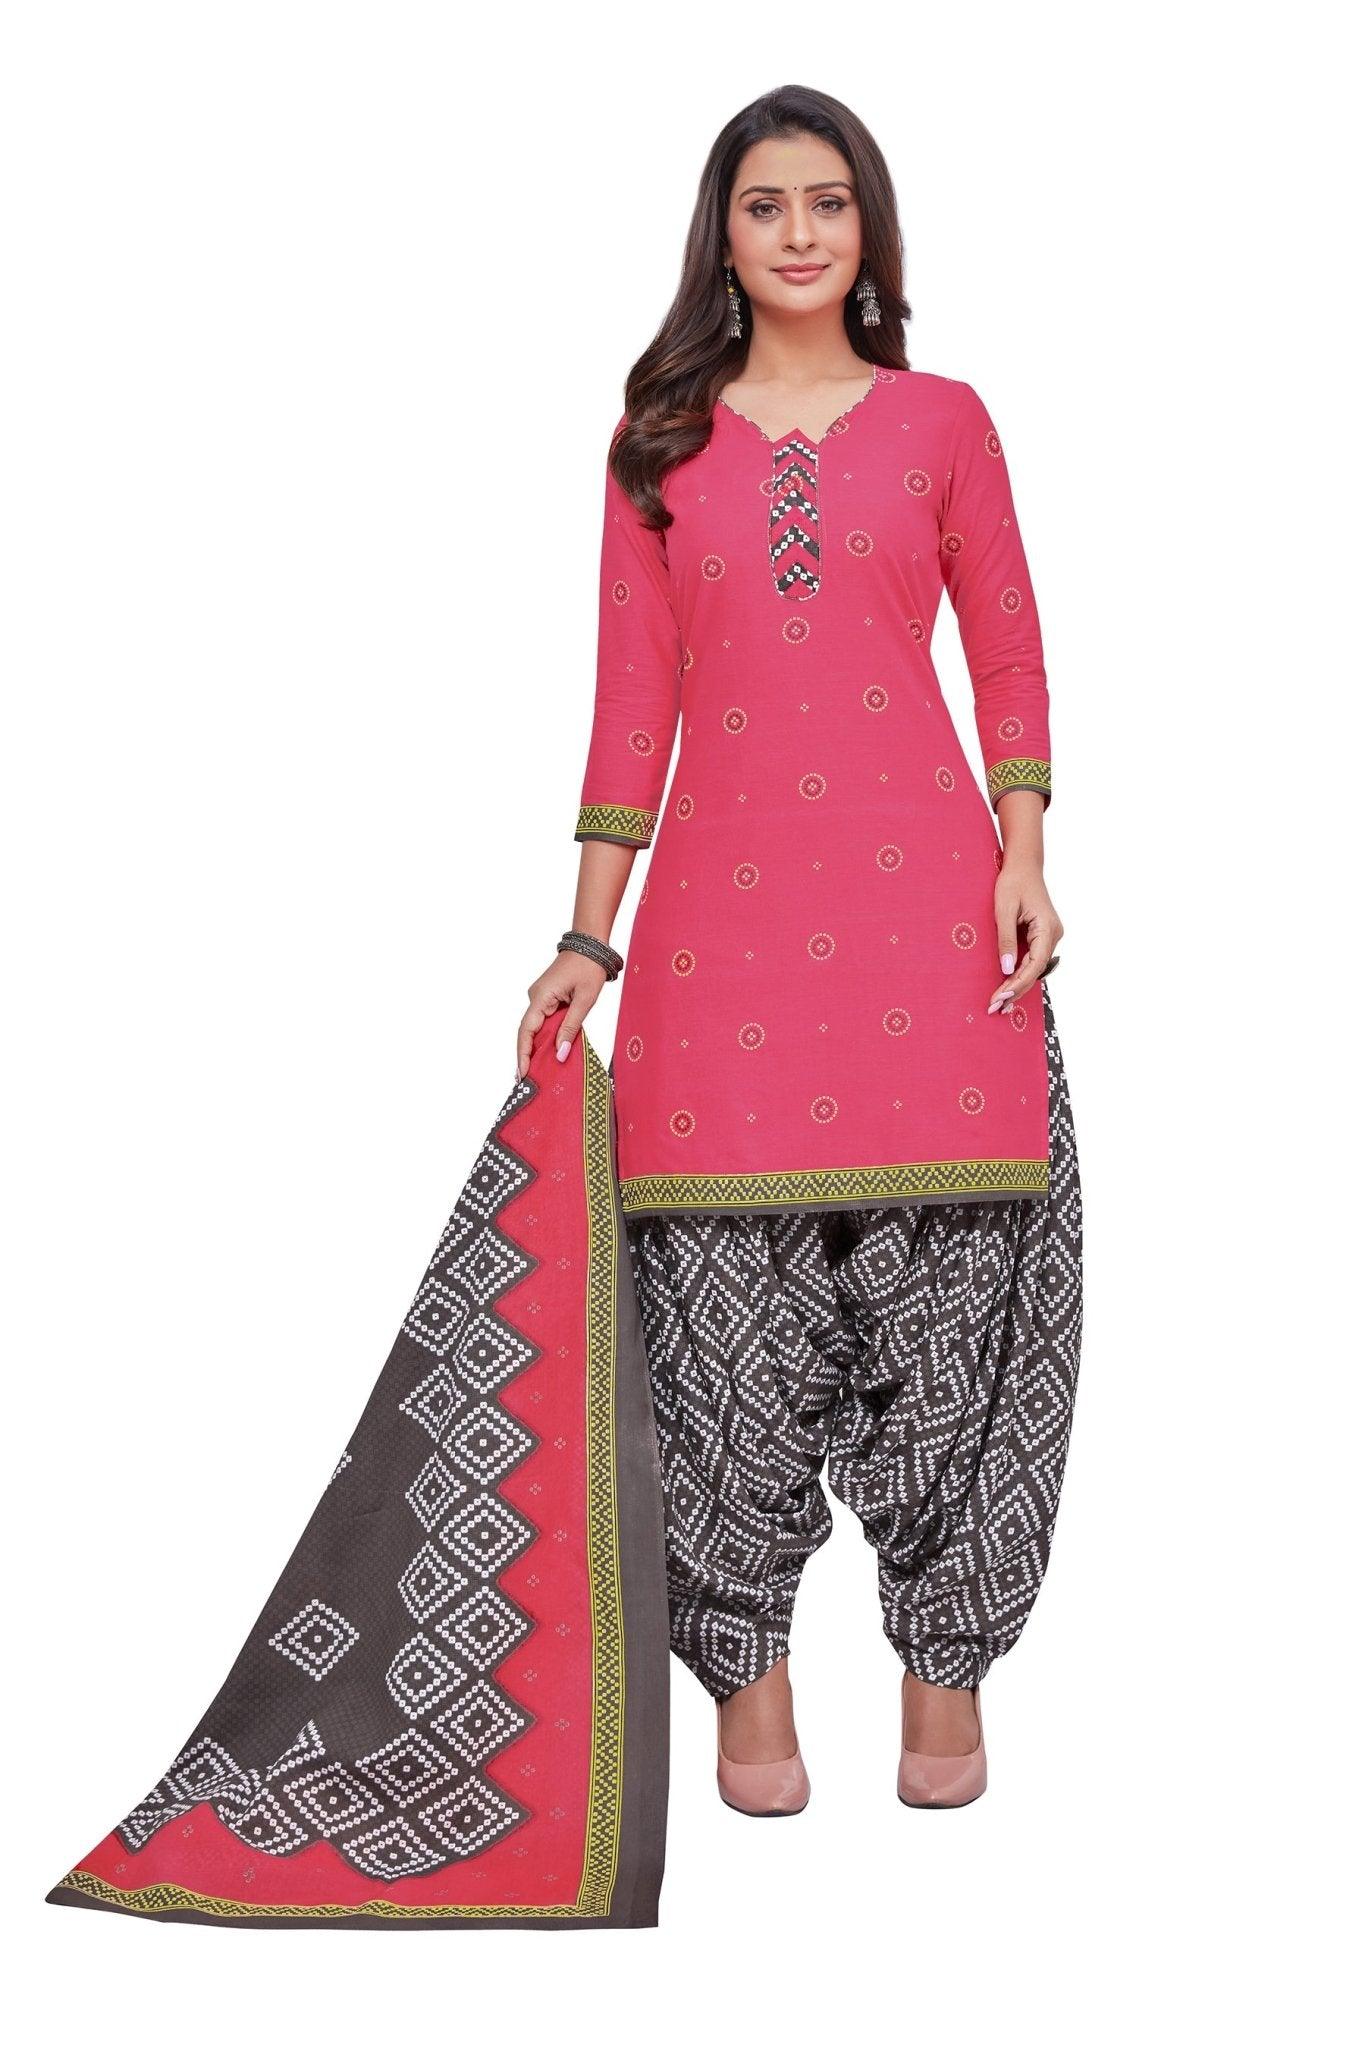 Cranberry Pink Top with Dark Grey Bottom and Dupatta. Premium Cotton Patiyala Dress. - Bavis Clothing